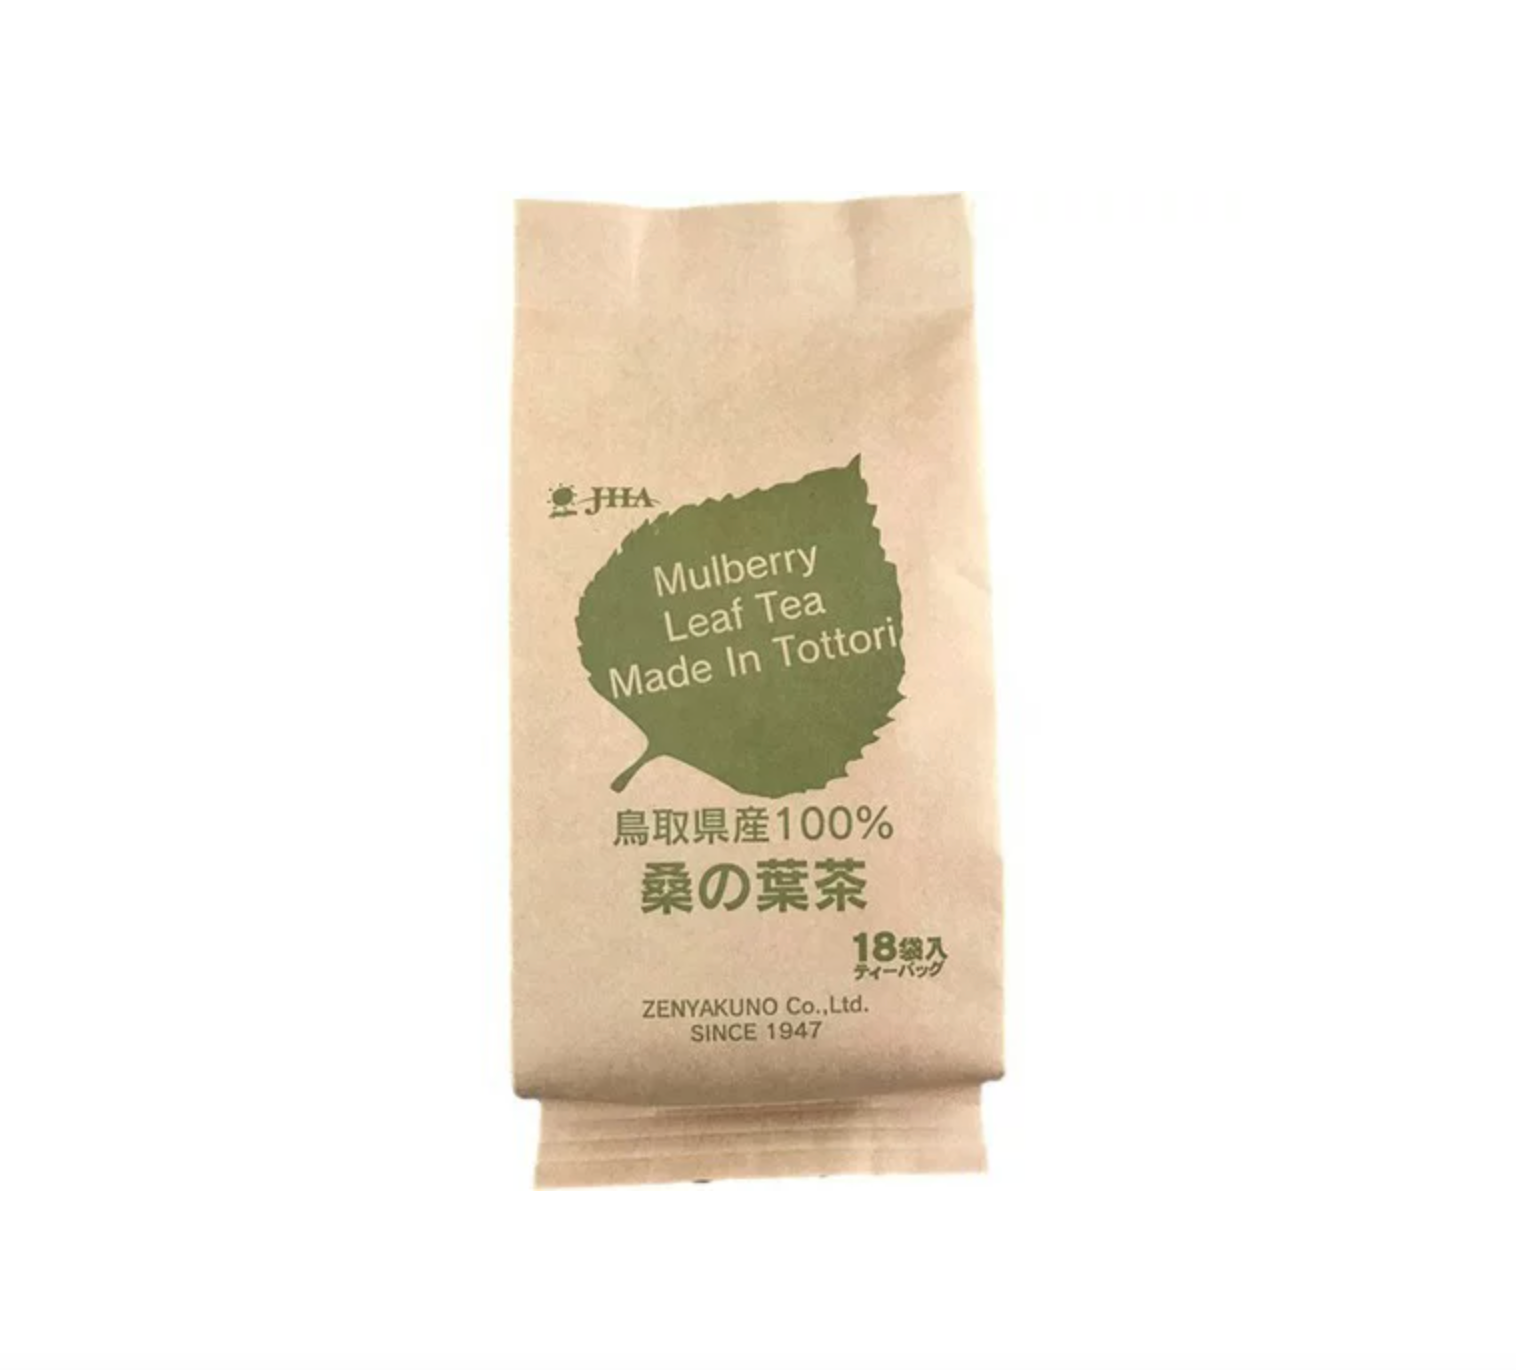 Zenyakuno Mulberry Leaf Tea 18 Bags - Made In Tottori - Organic Mulberry Leaf Tea